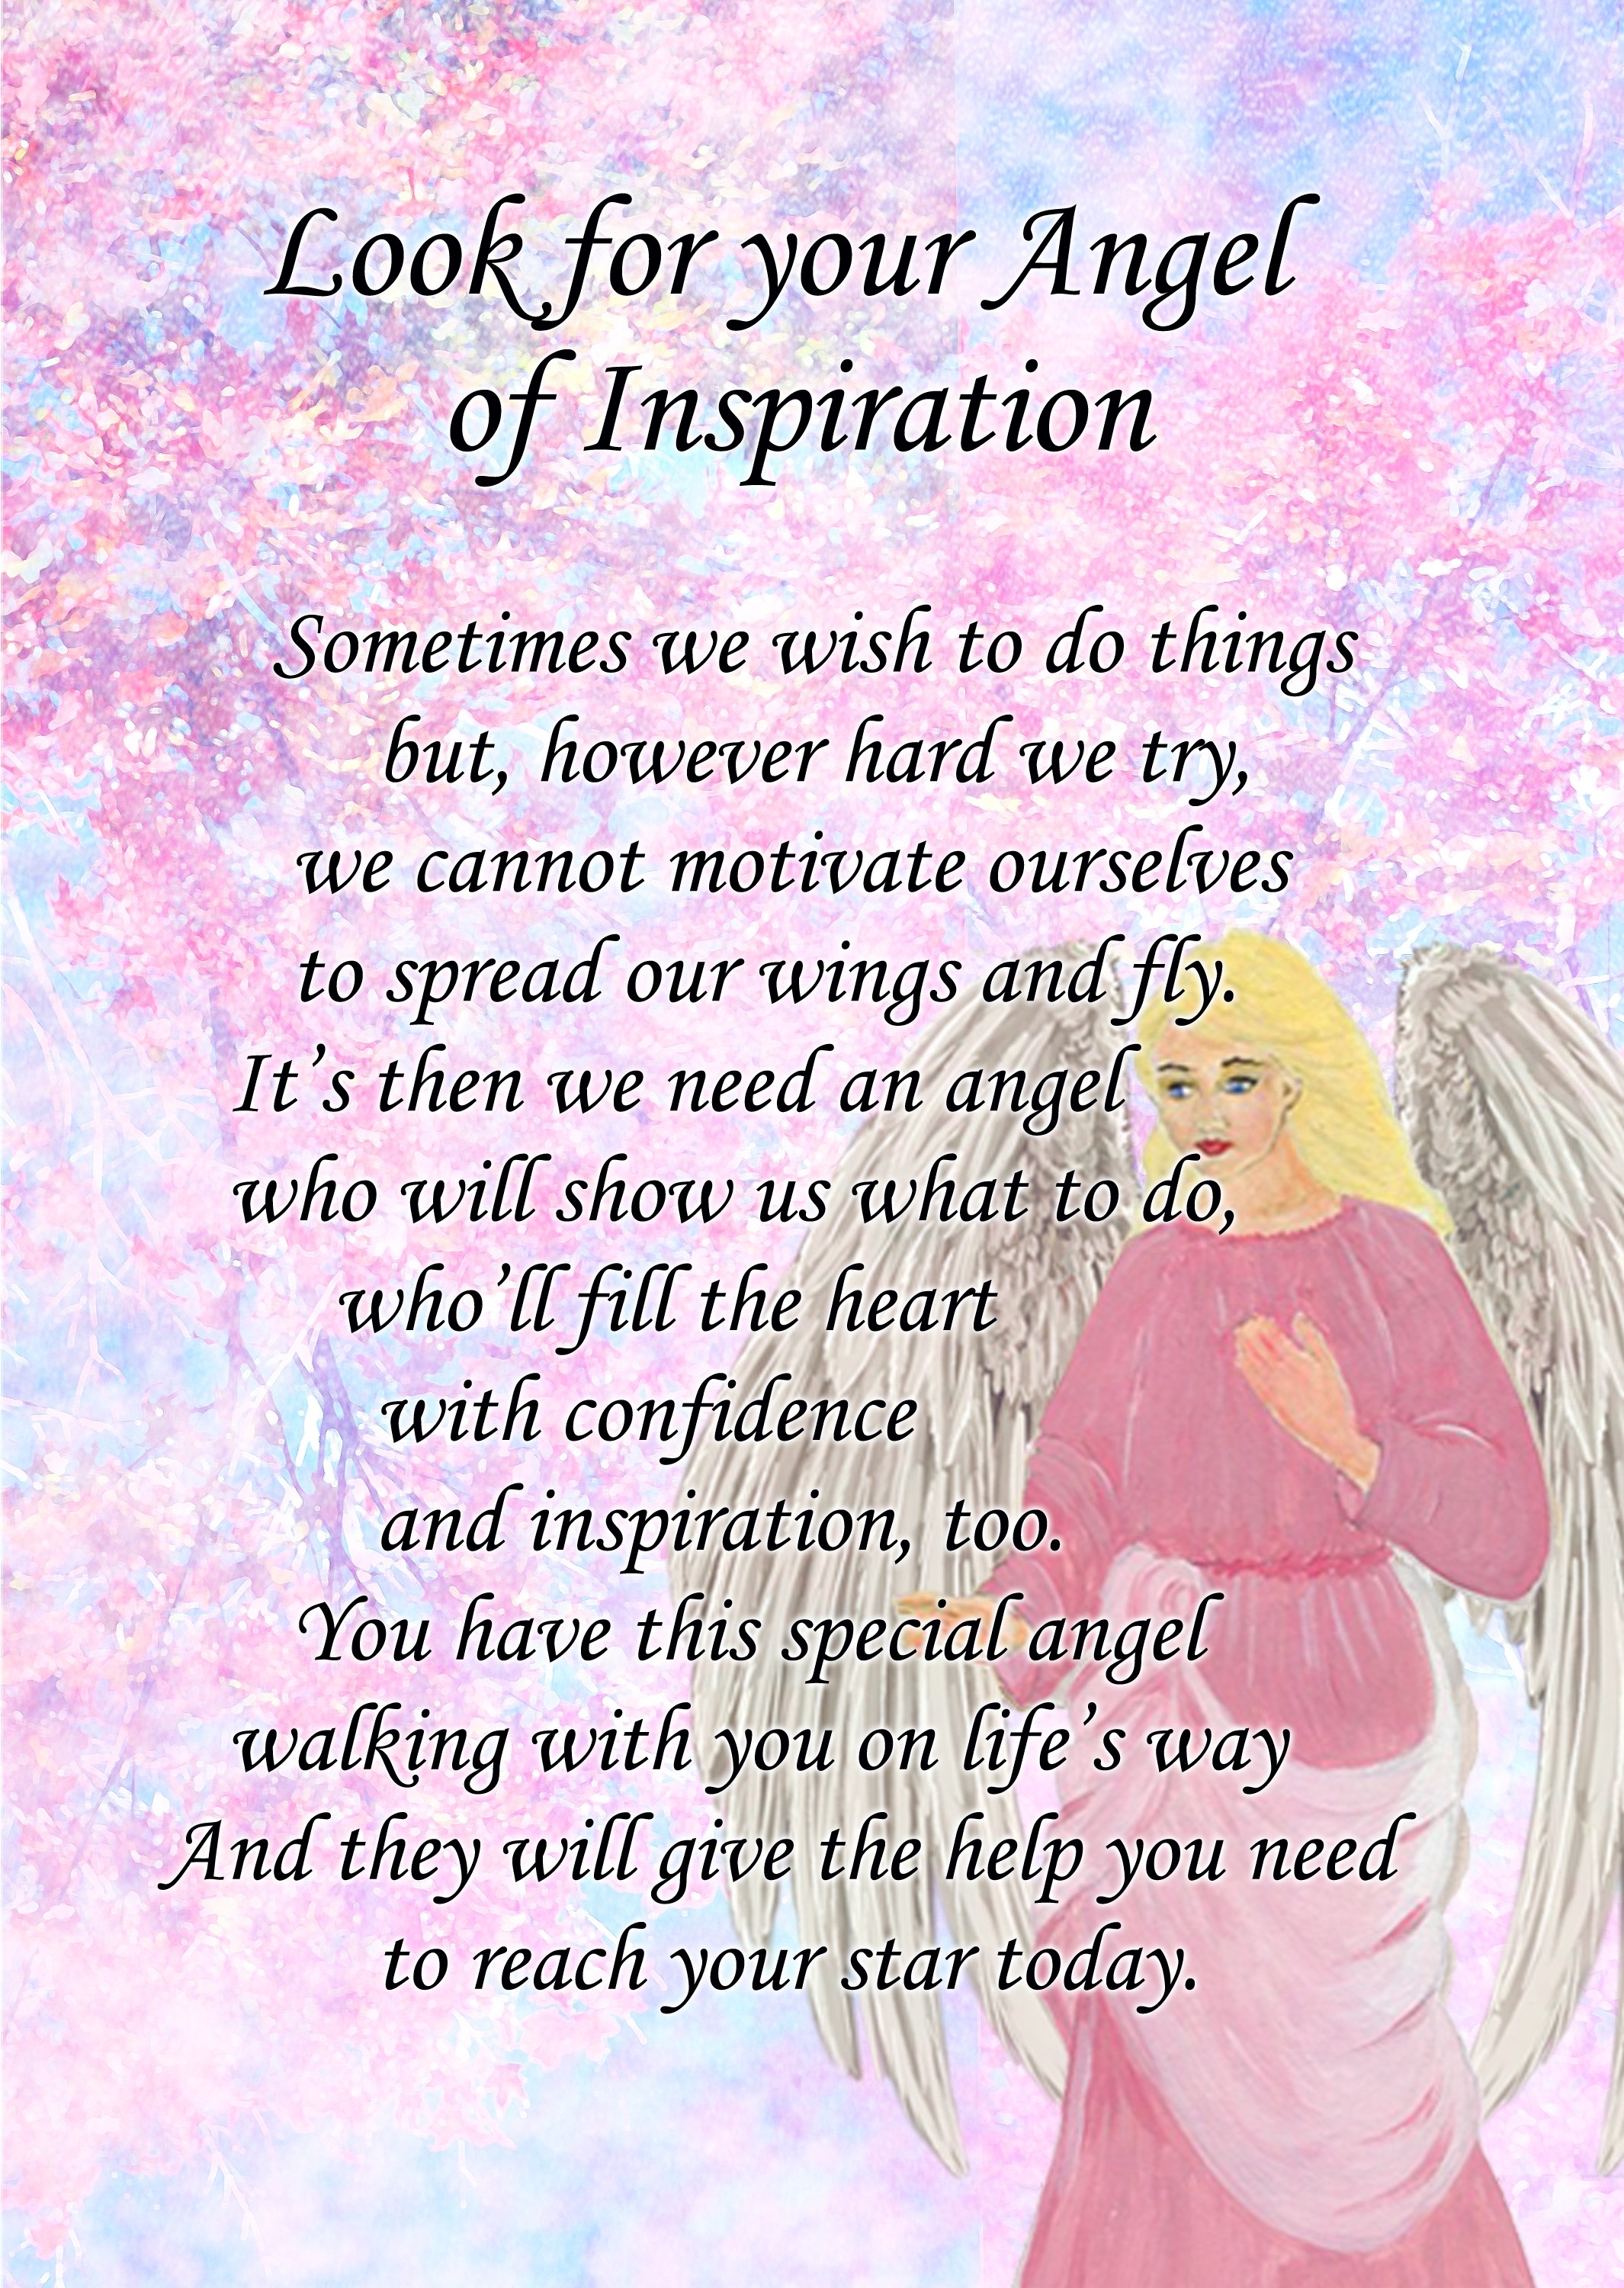 Angel of Inspiration Poem Verse Greeting Card